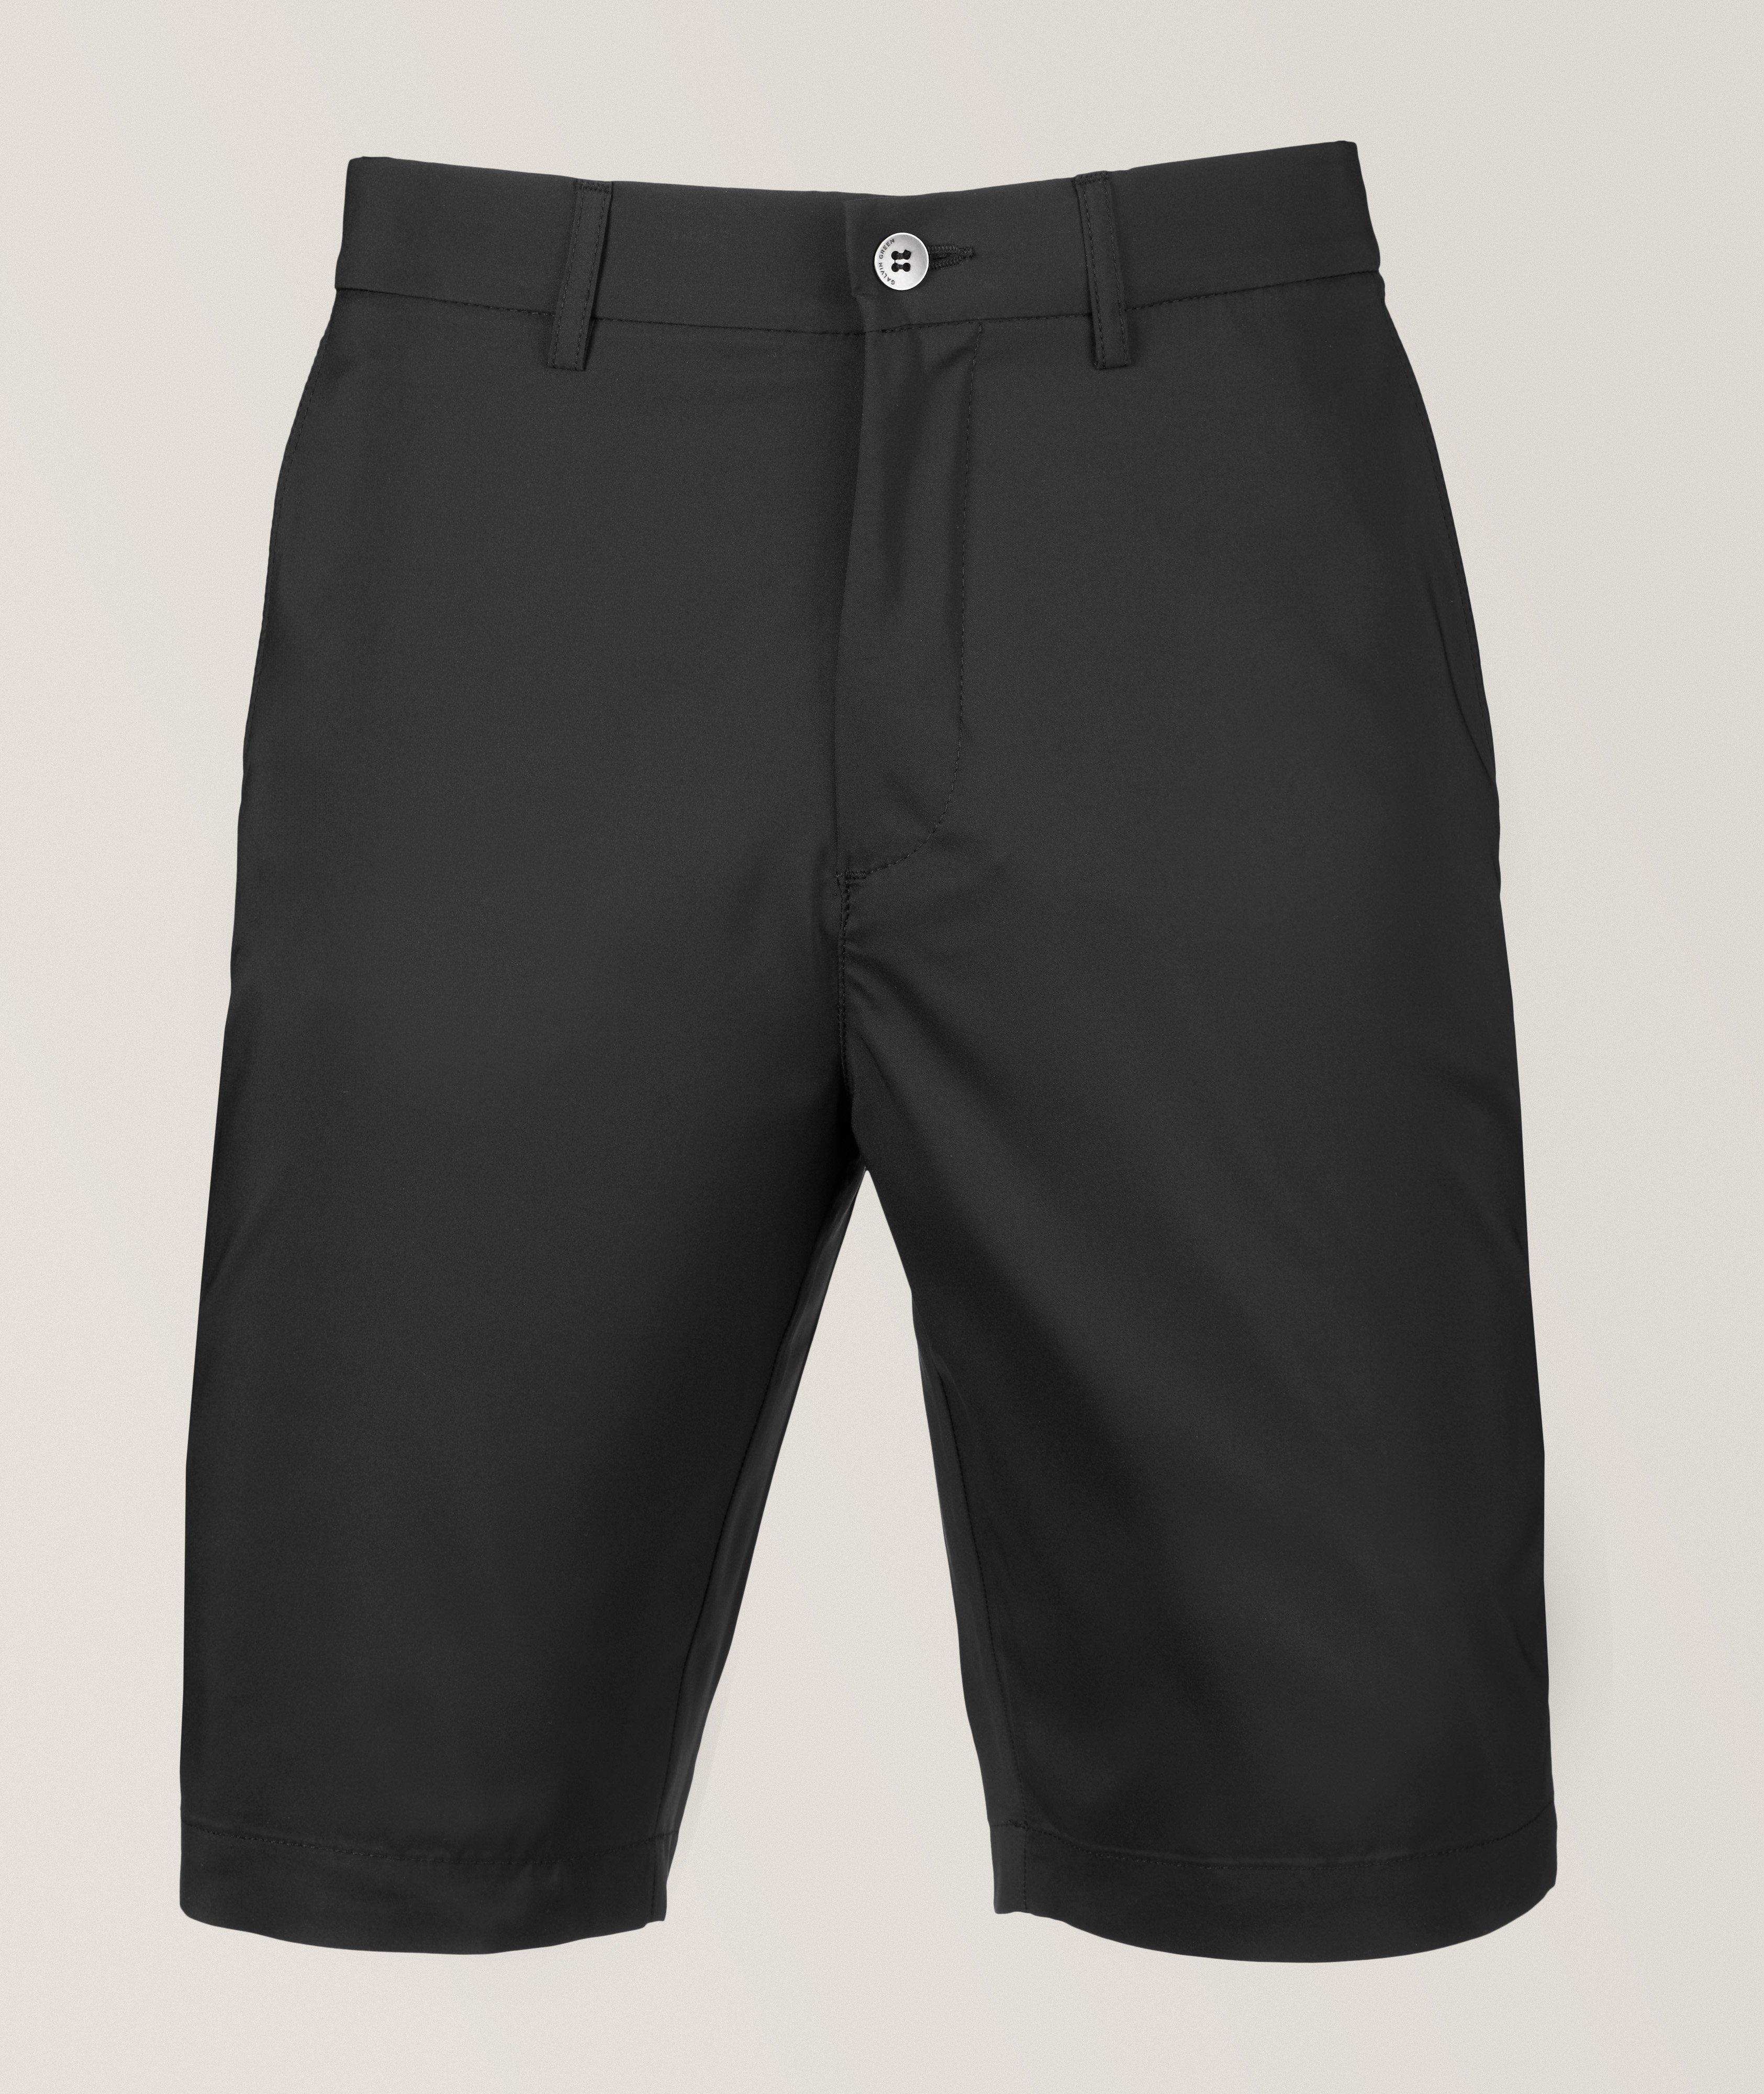 Percy Golf Shorts image 0